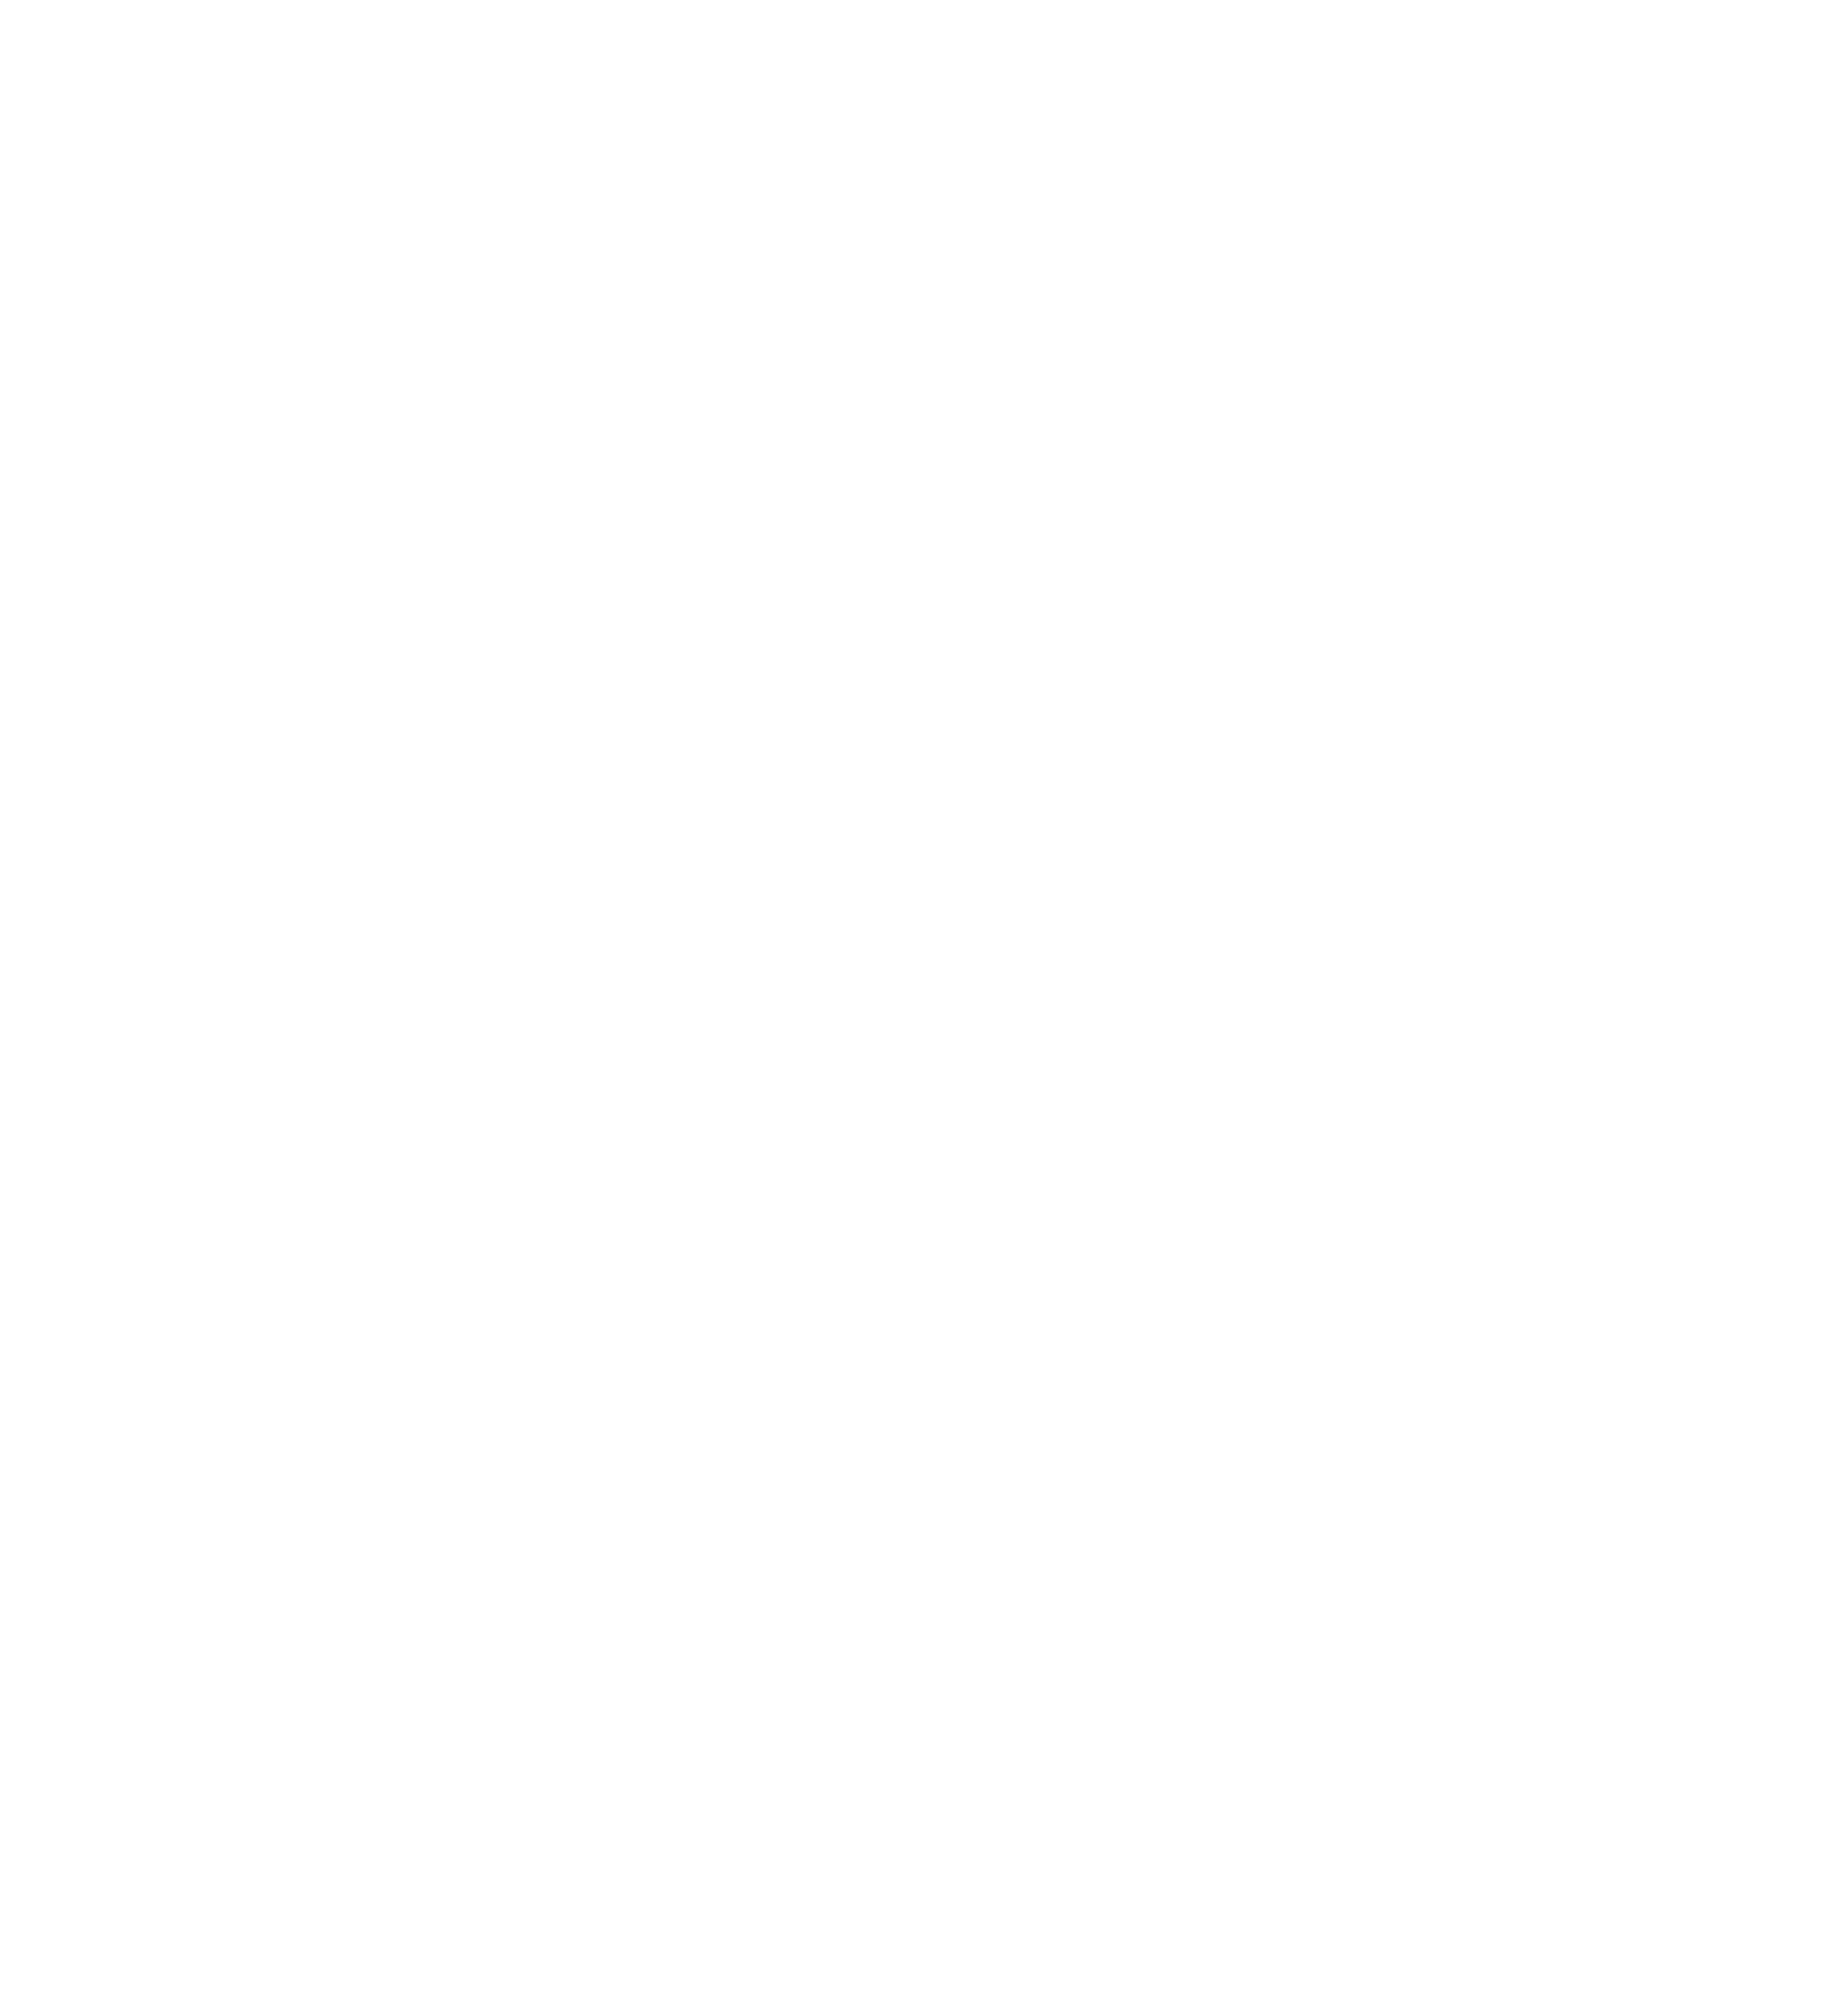 2022 Travellers' Choice award logo white